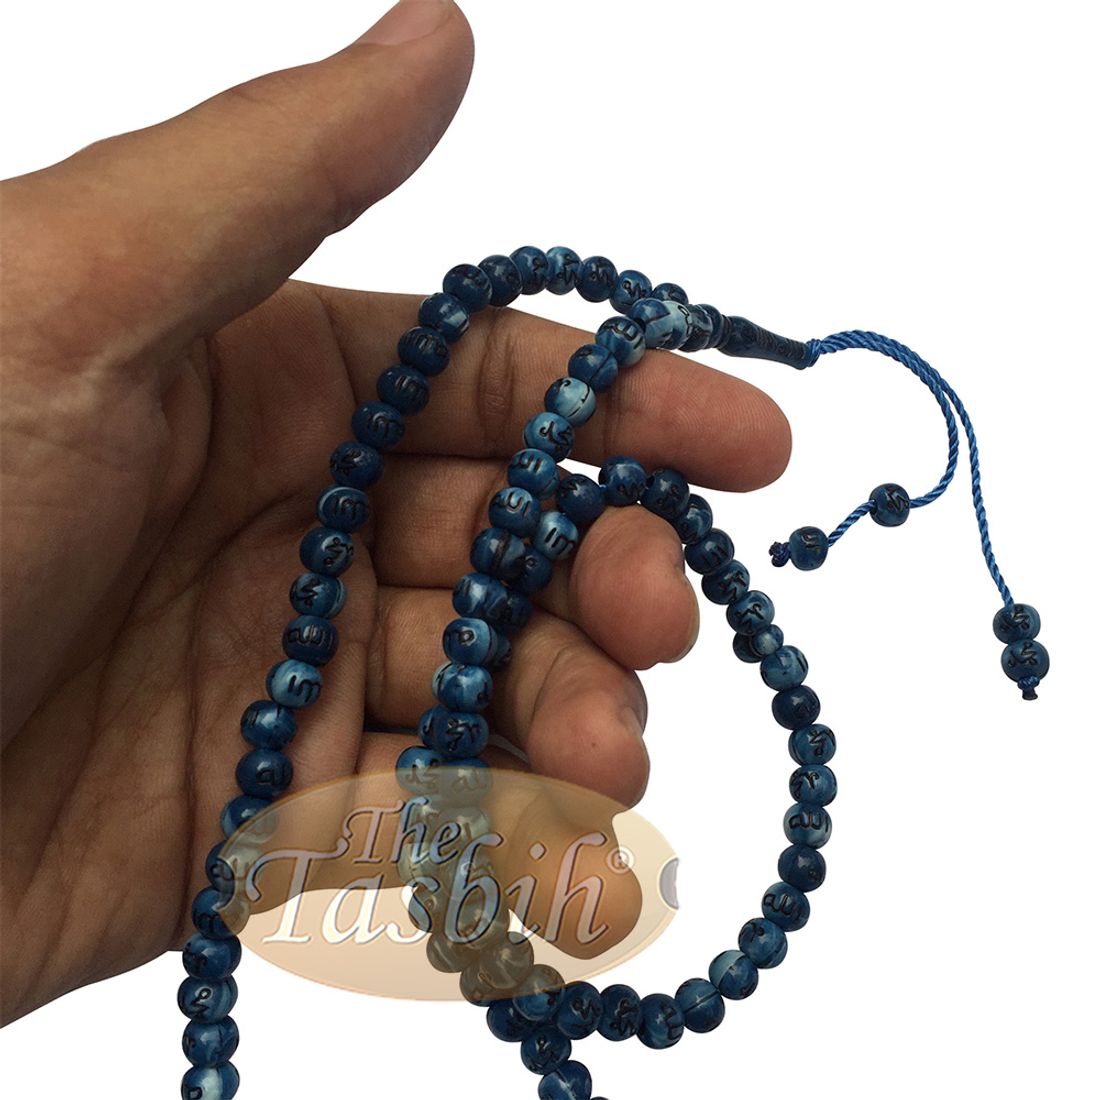 Marmer Biru Plastik Kecil 7mm Tasbih Doa Perak Manik Allah Muhammad